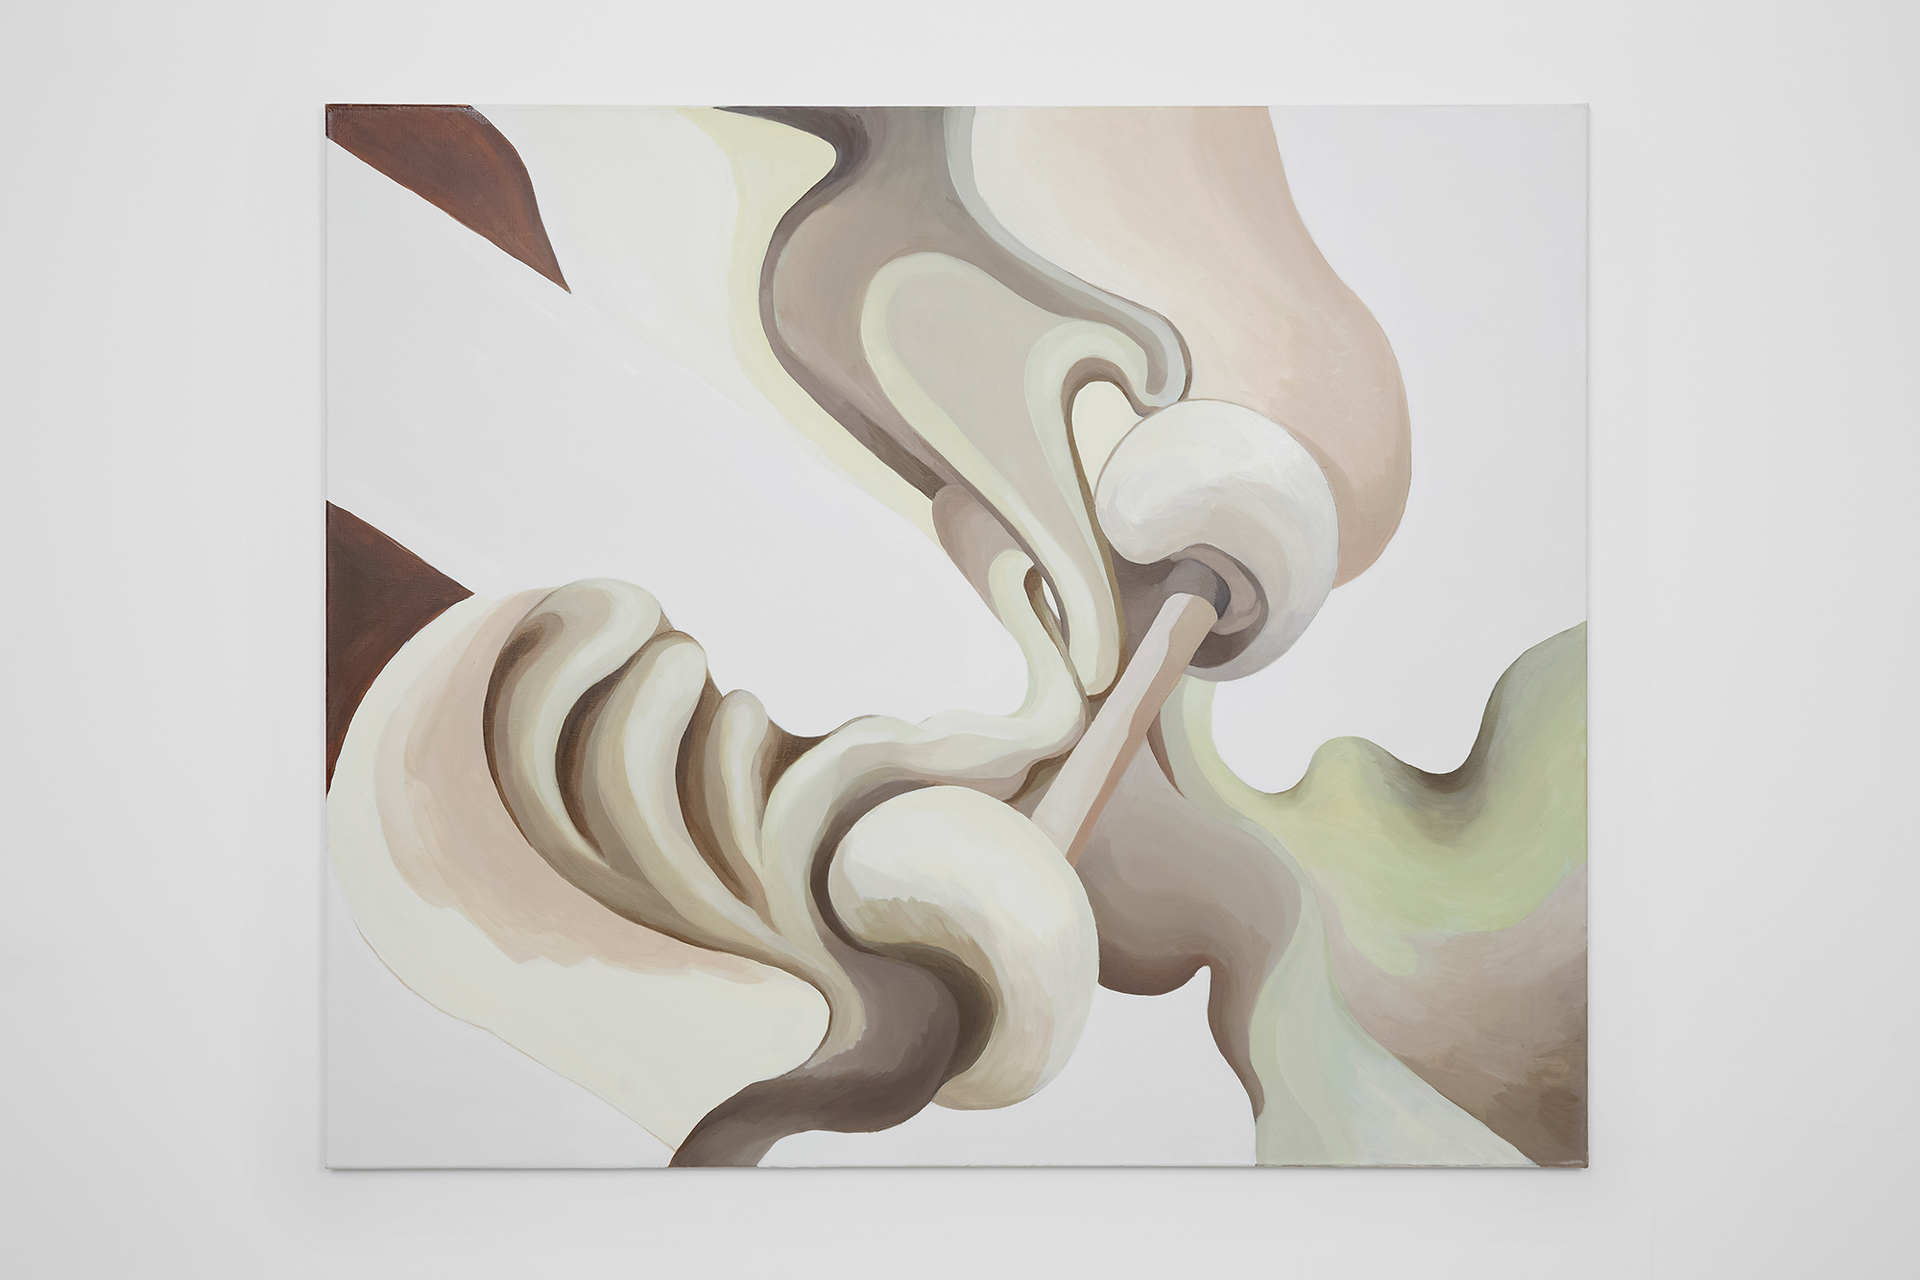 Perri MacKenzie, Cooling System, 2019, Acrylic on canvas, 190 x 160 cm